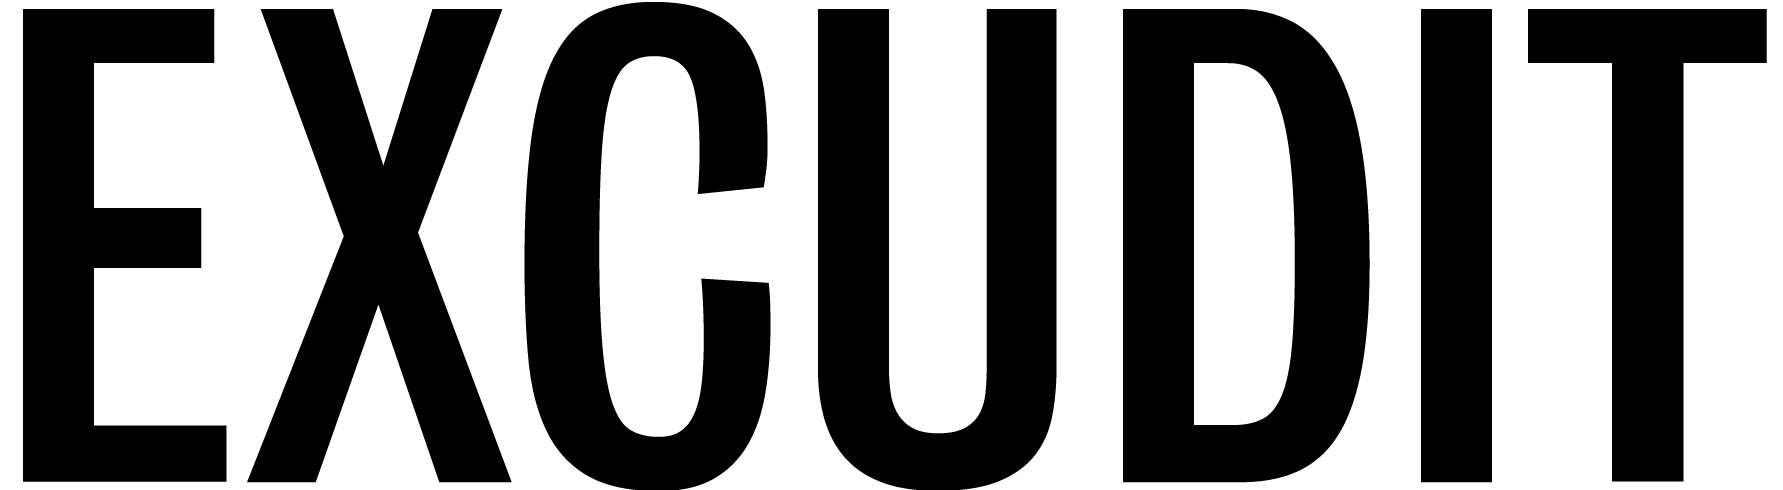 Logo Excudit - Kulturmagazin für Nürnberg